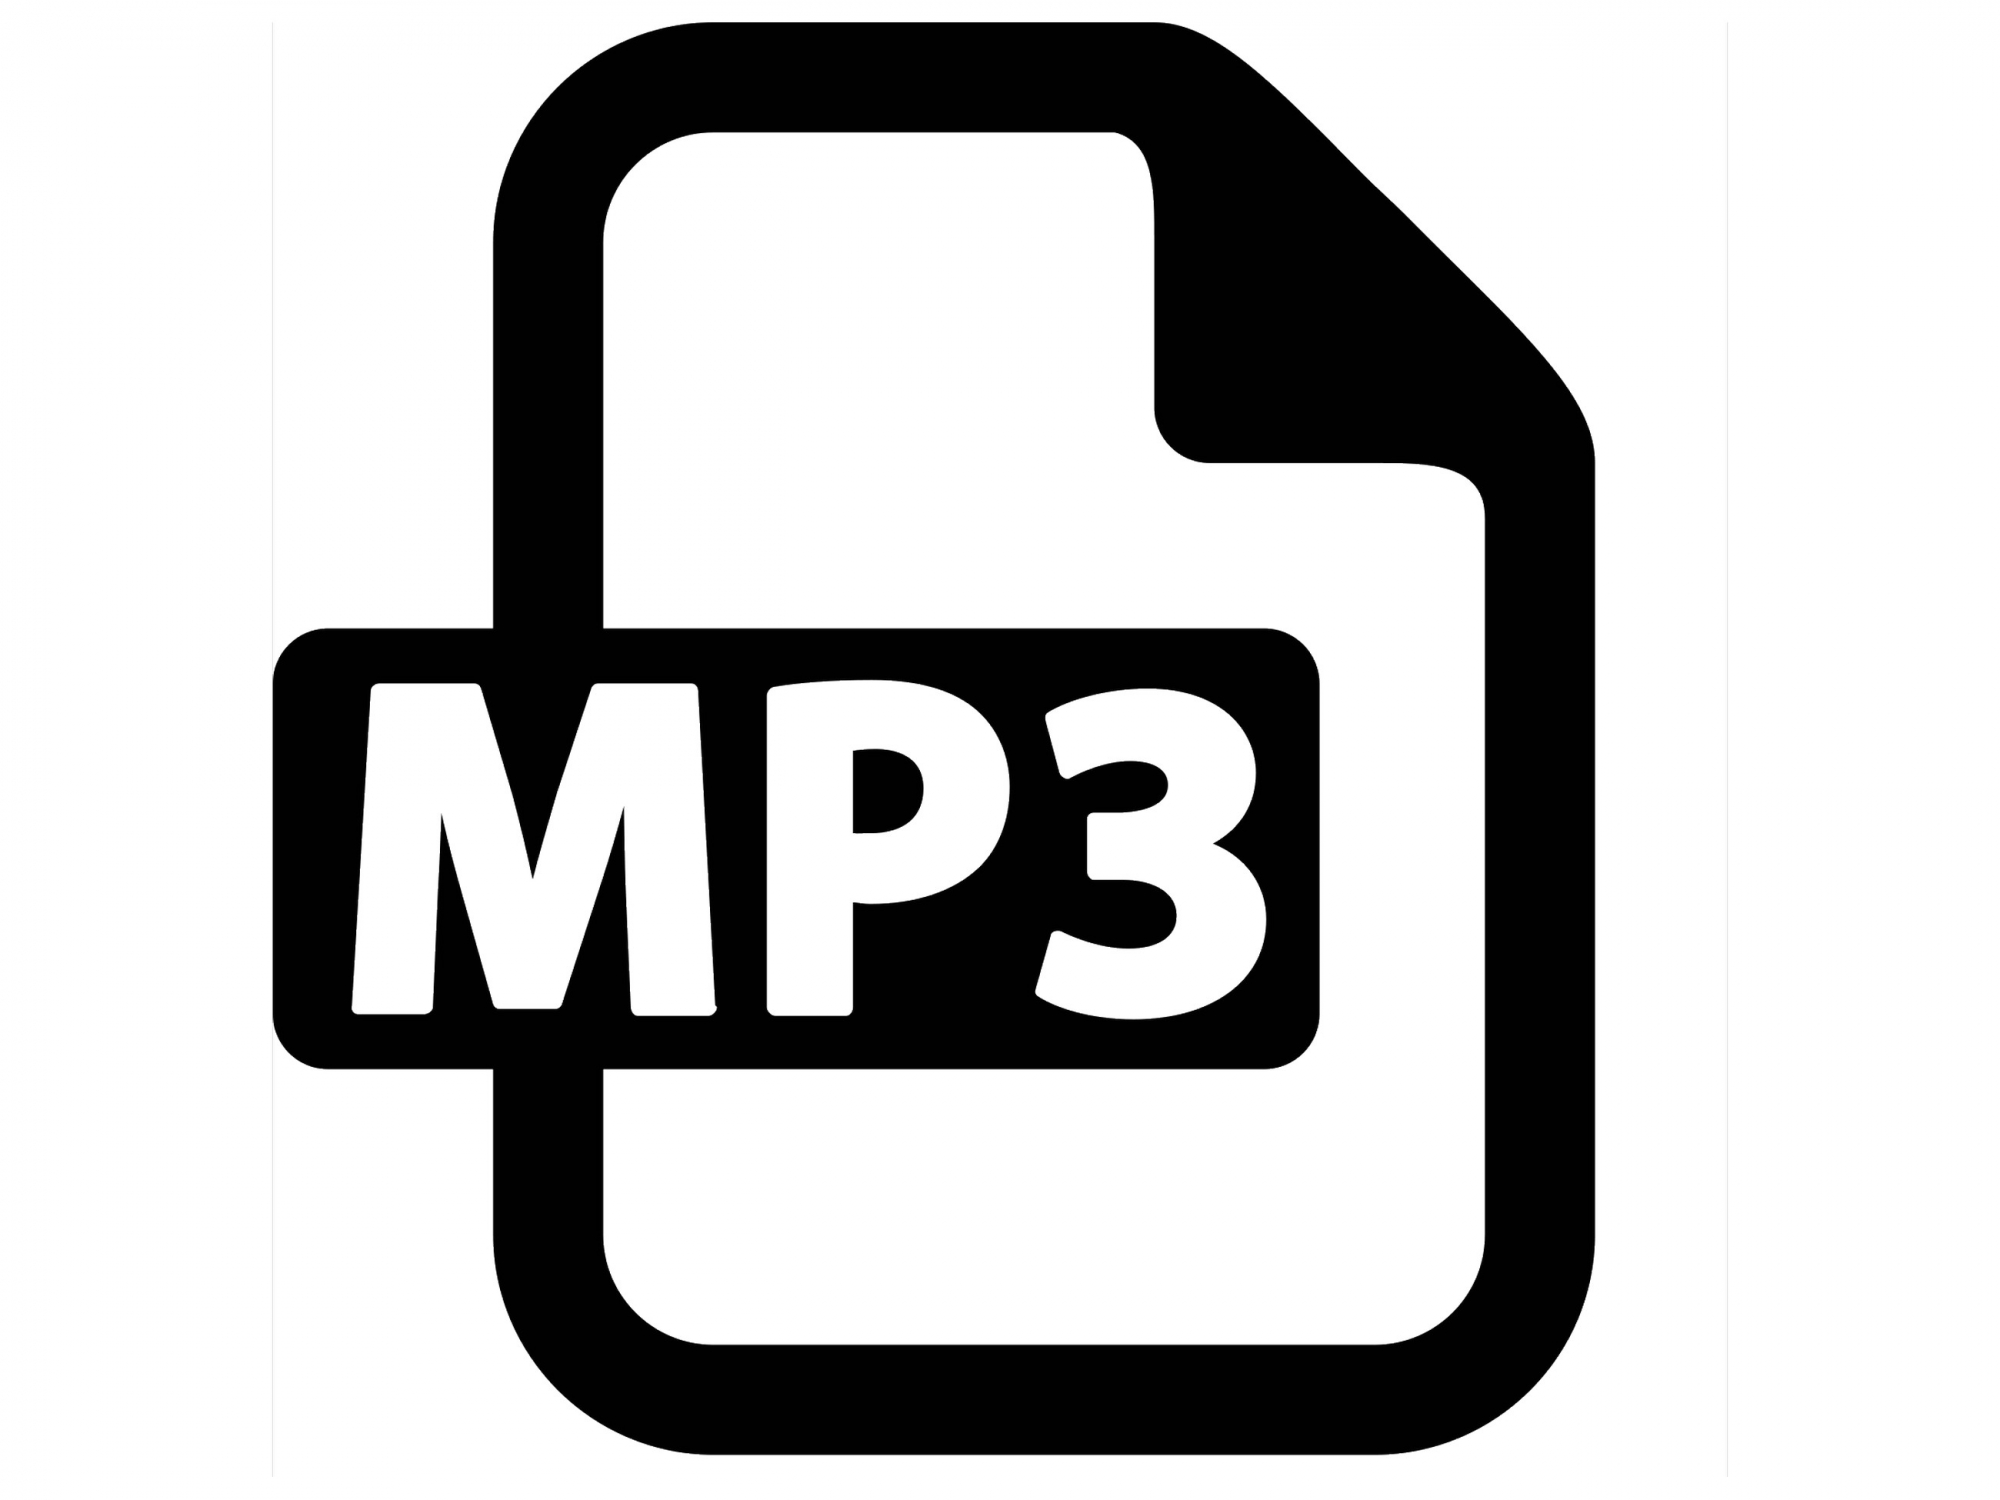 Мп 3 сайты. Формат мп3. Значок mp3. Иконки mp3 файлов. Mp3 звуковой Формат.